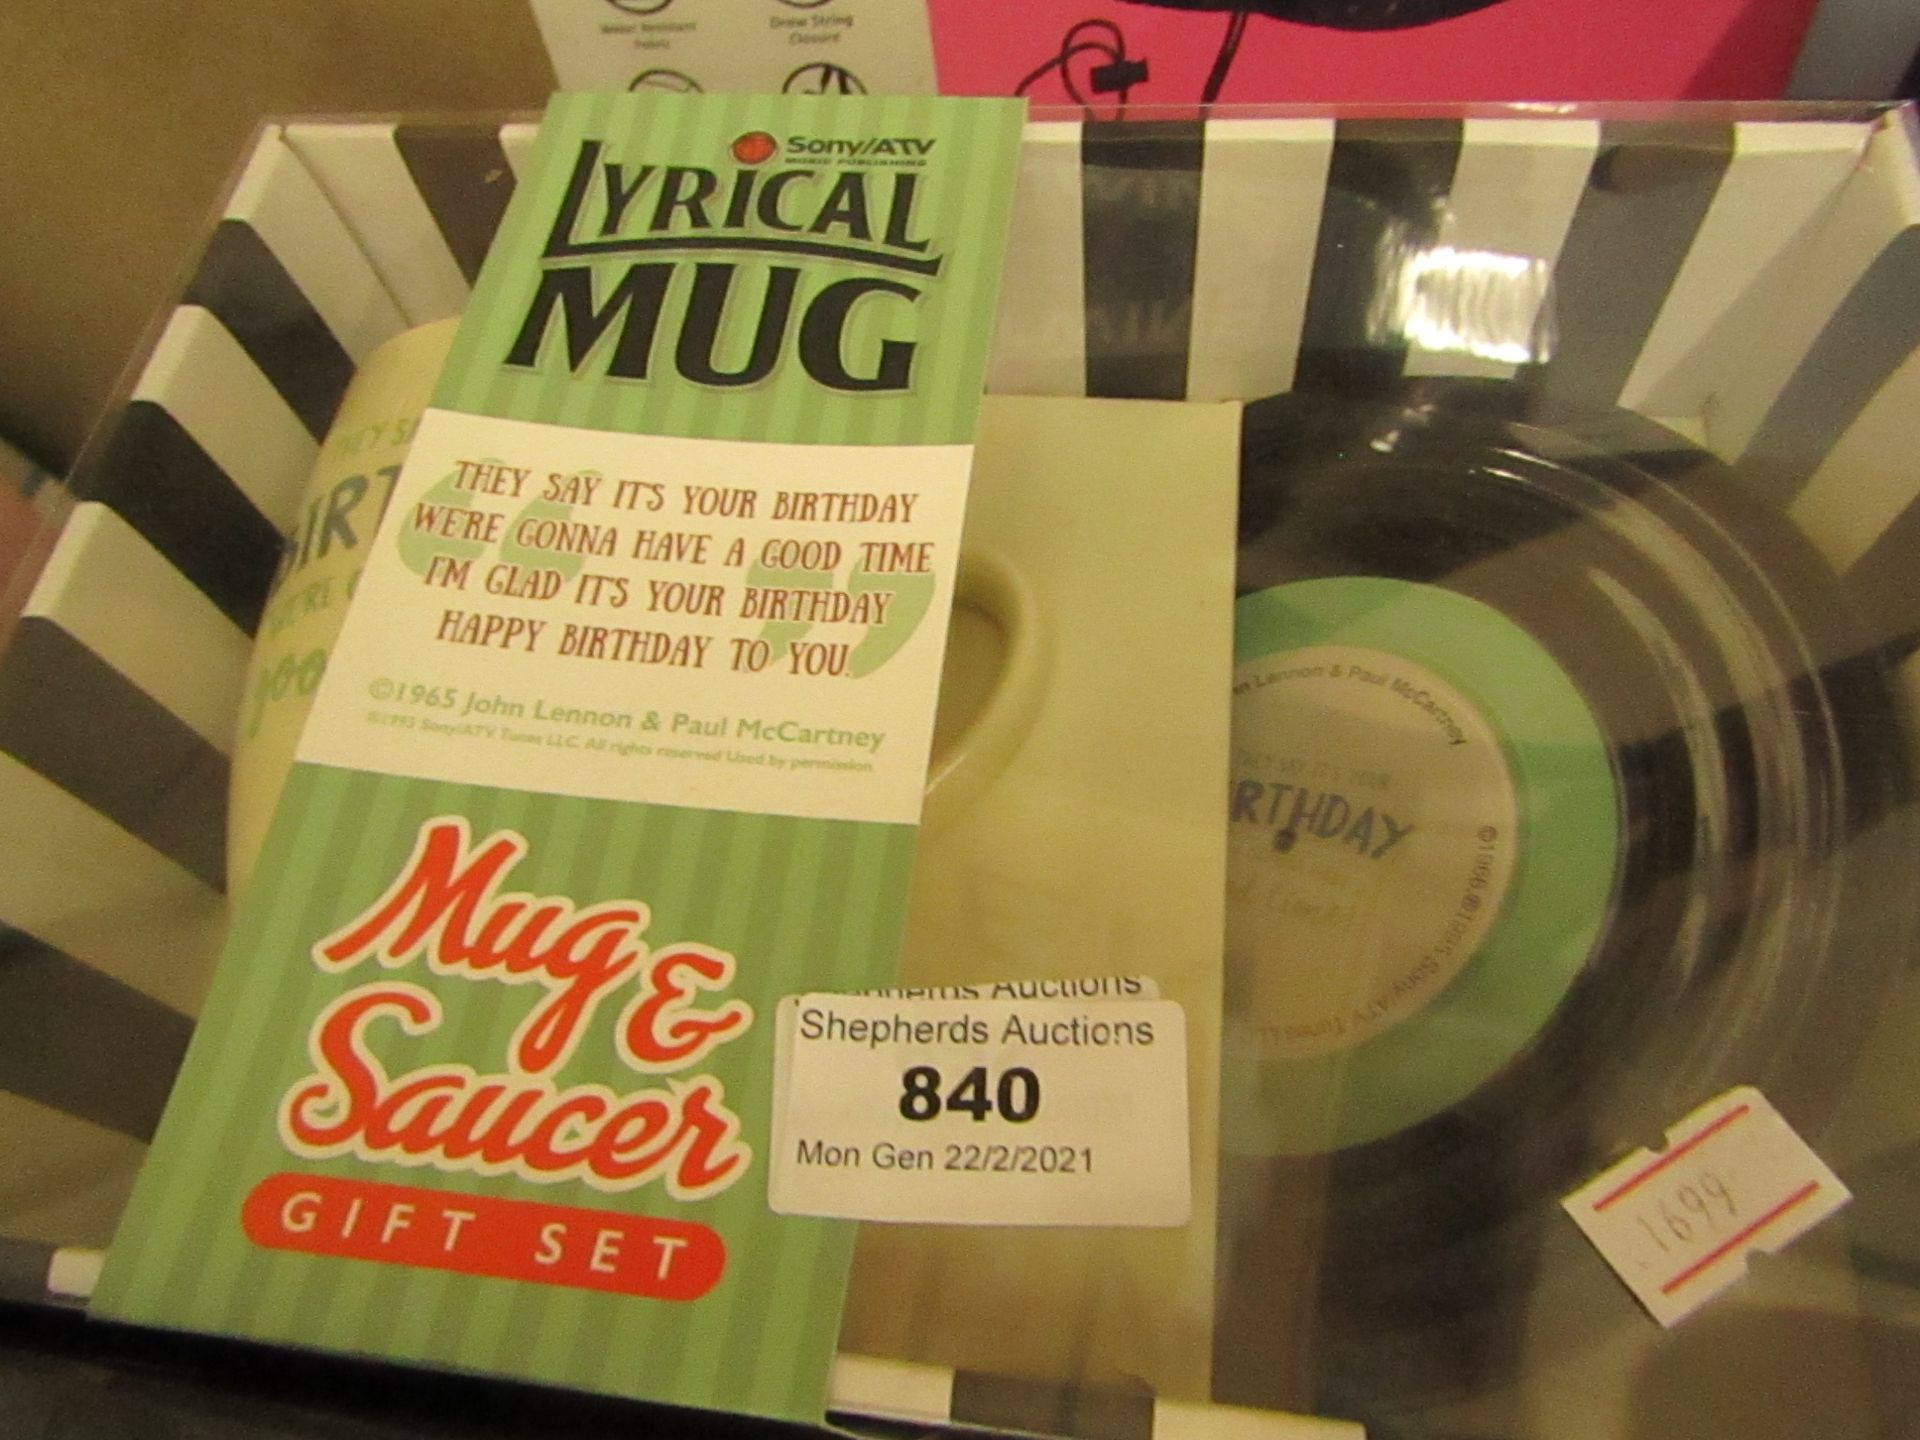 Lyrical Mug & Saucer Gift Set - New & Boxed